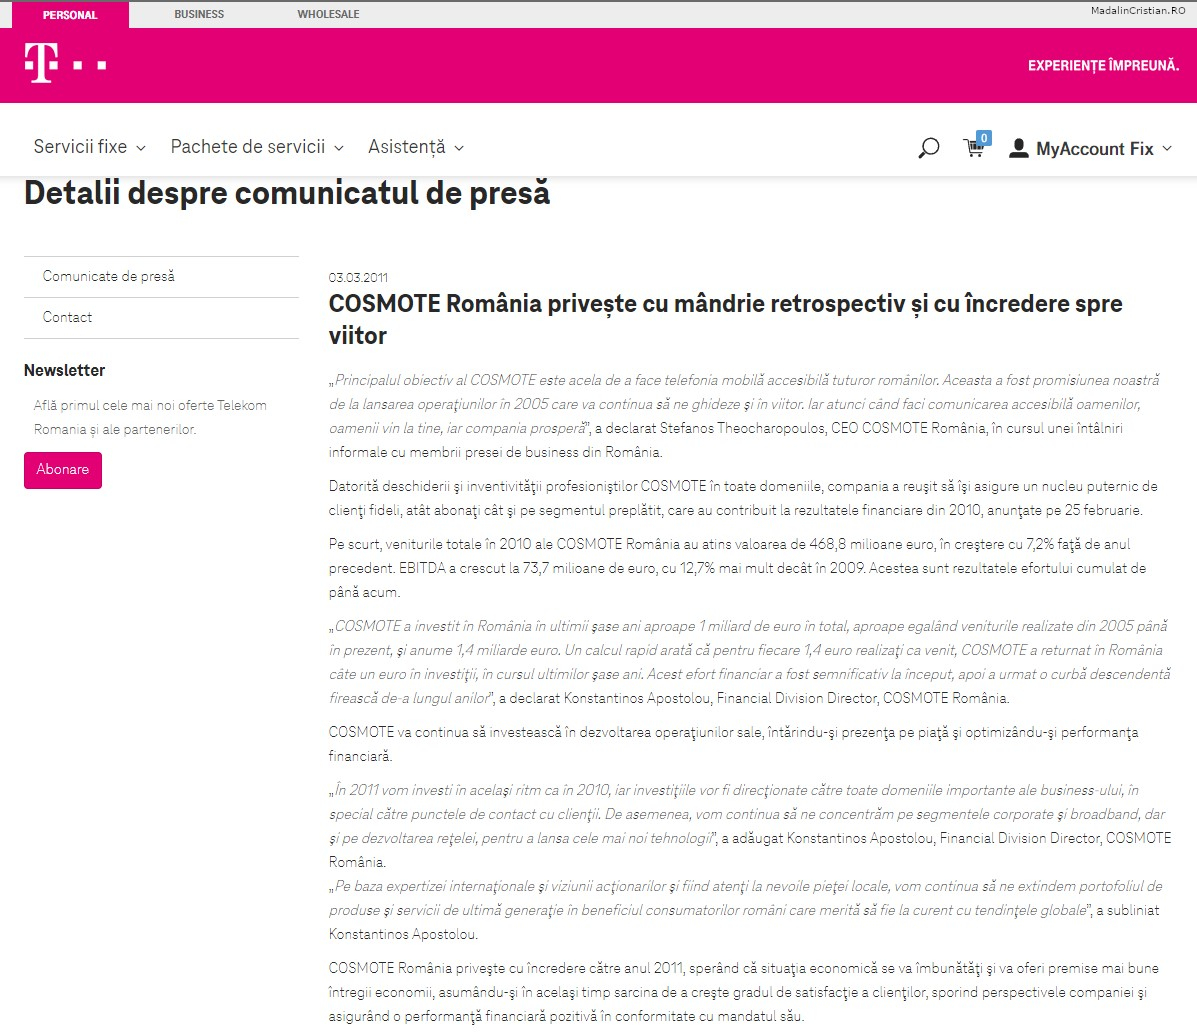 Comunicat de presa Telekom 03.03.2011 COSMOTE Romania priveste cu mandrie retrospectiv si cu incredere spre viitor